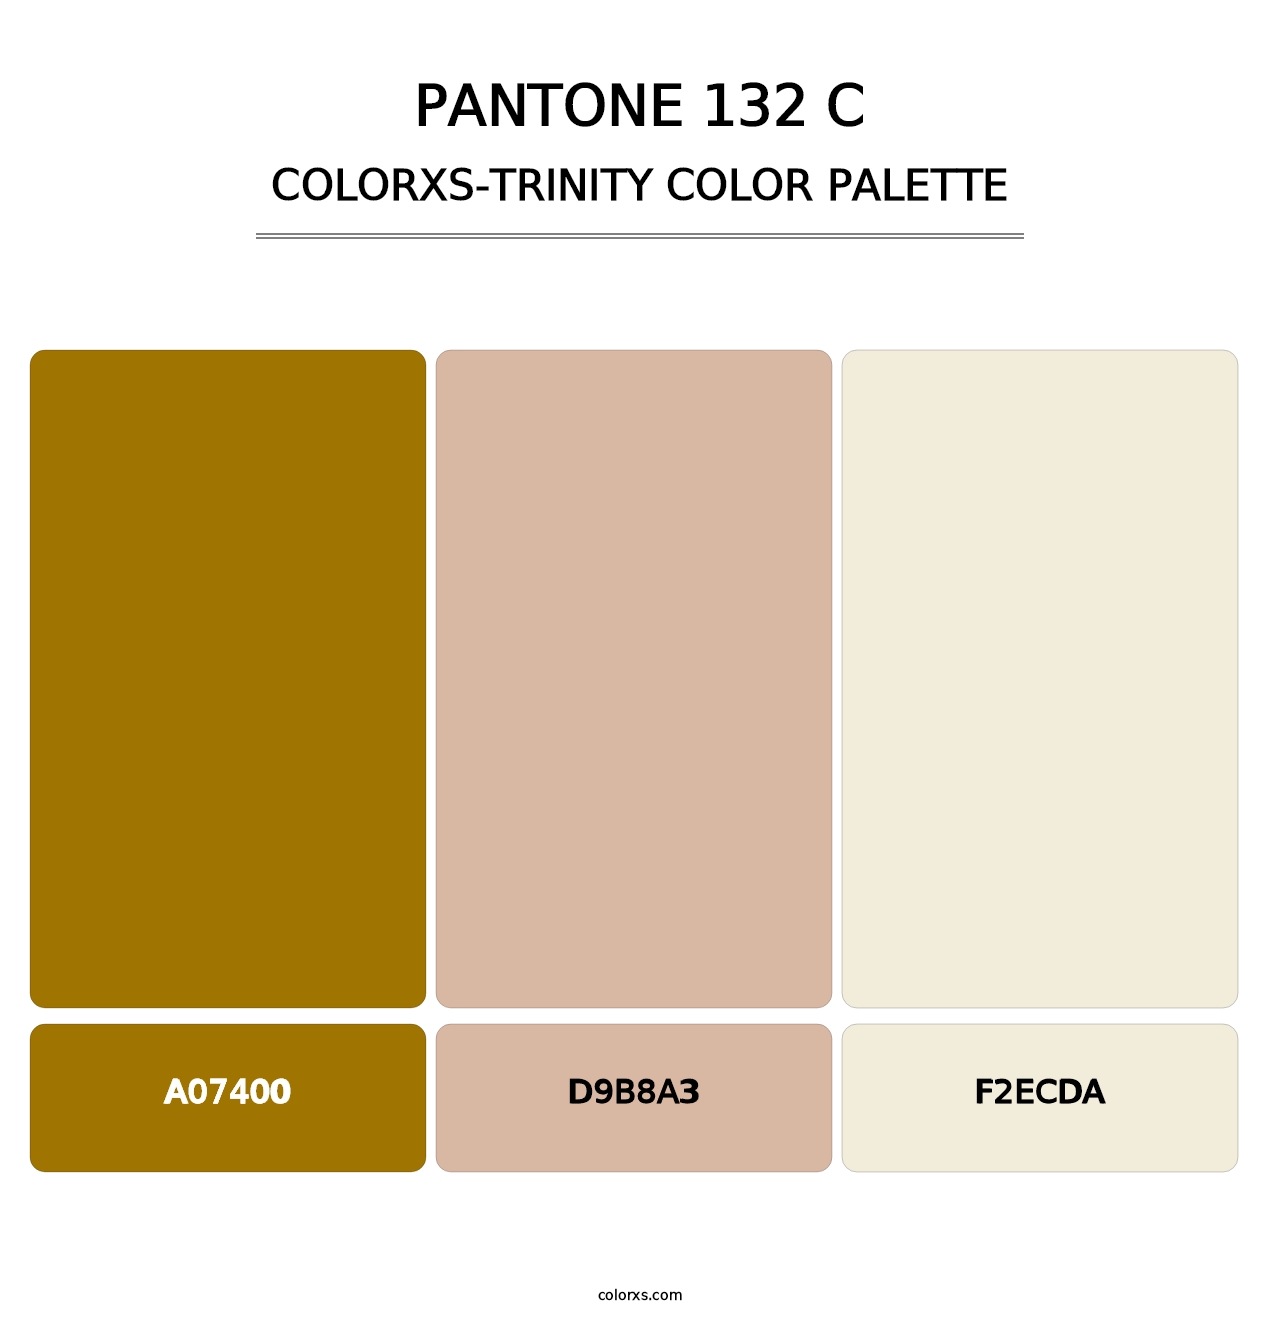 PANTONE 132 C - Colorxs Trinity Palette